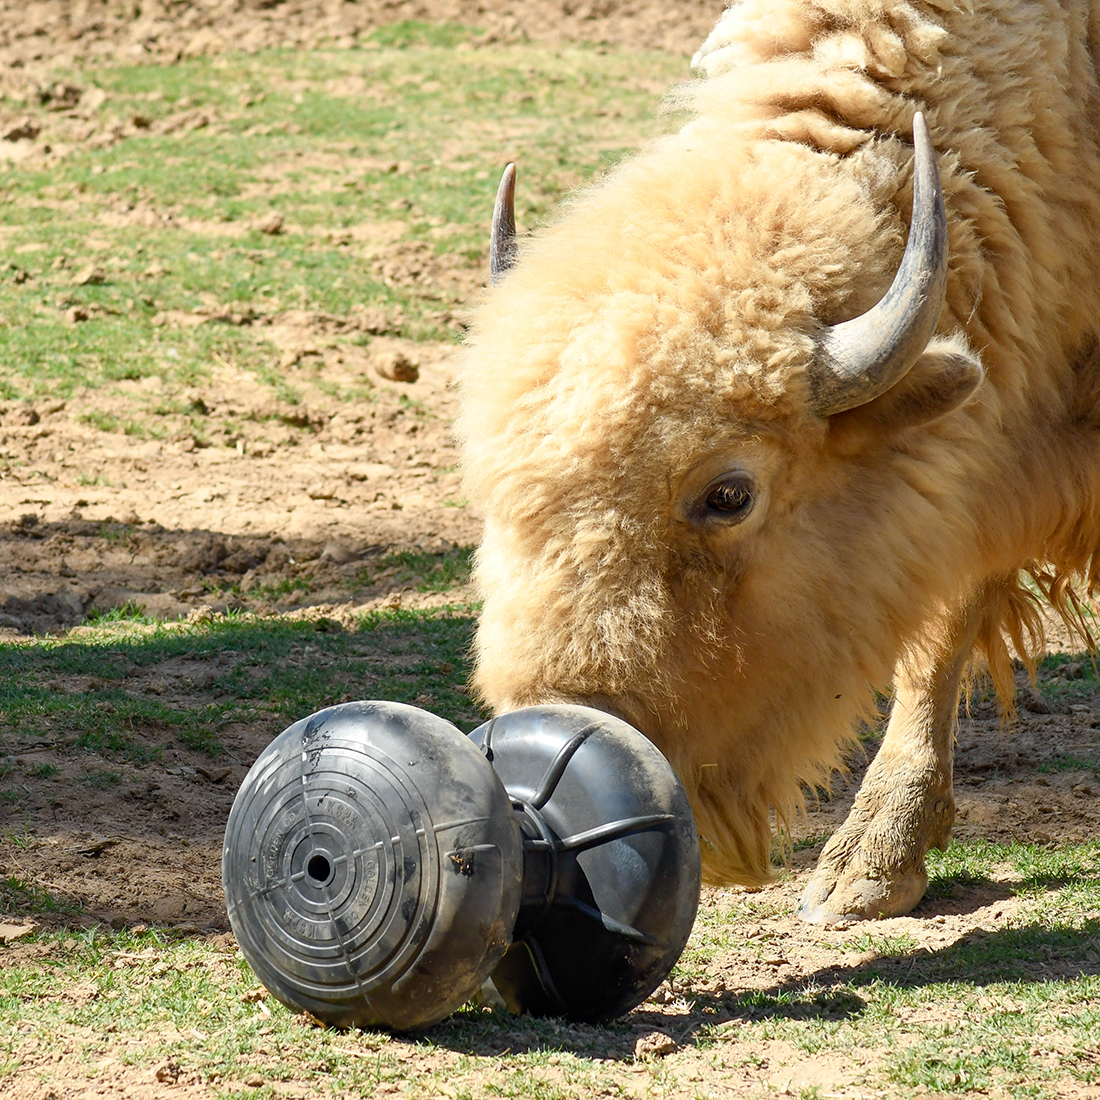 Tan bison nudging roller on ground